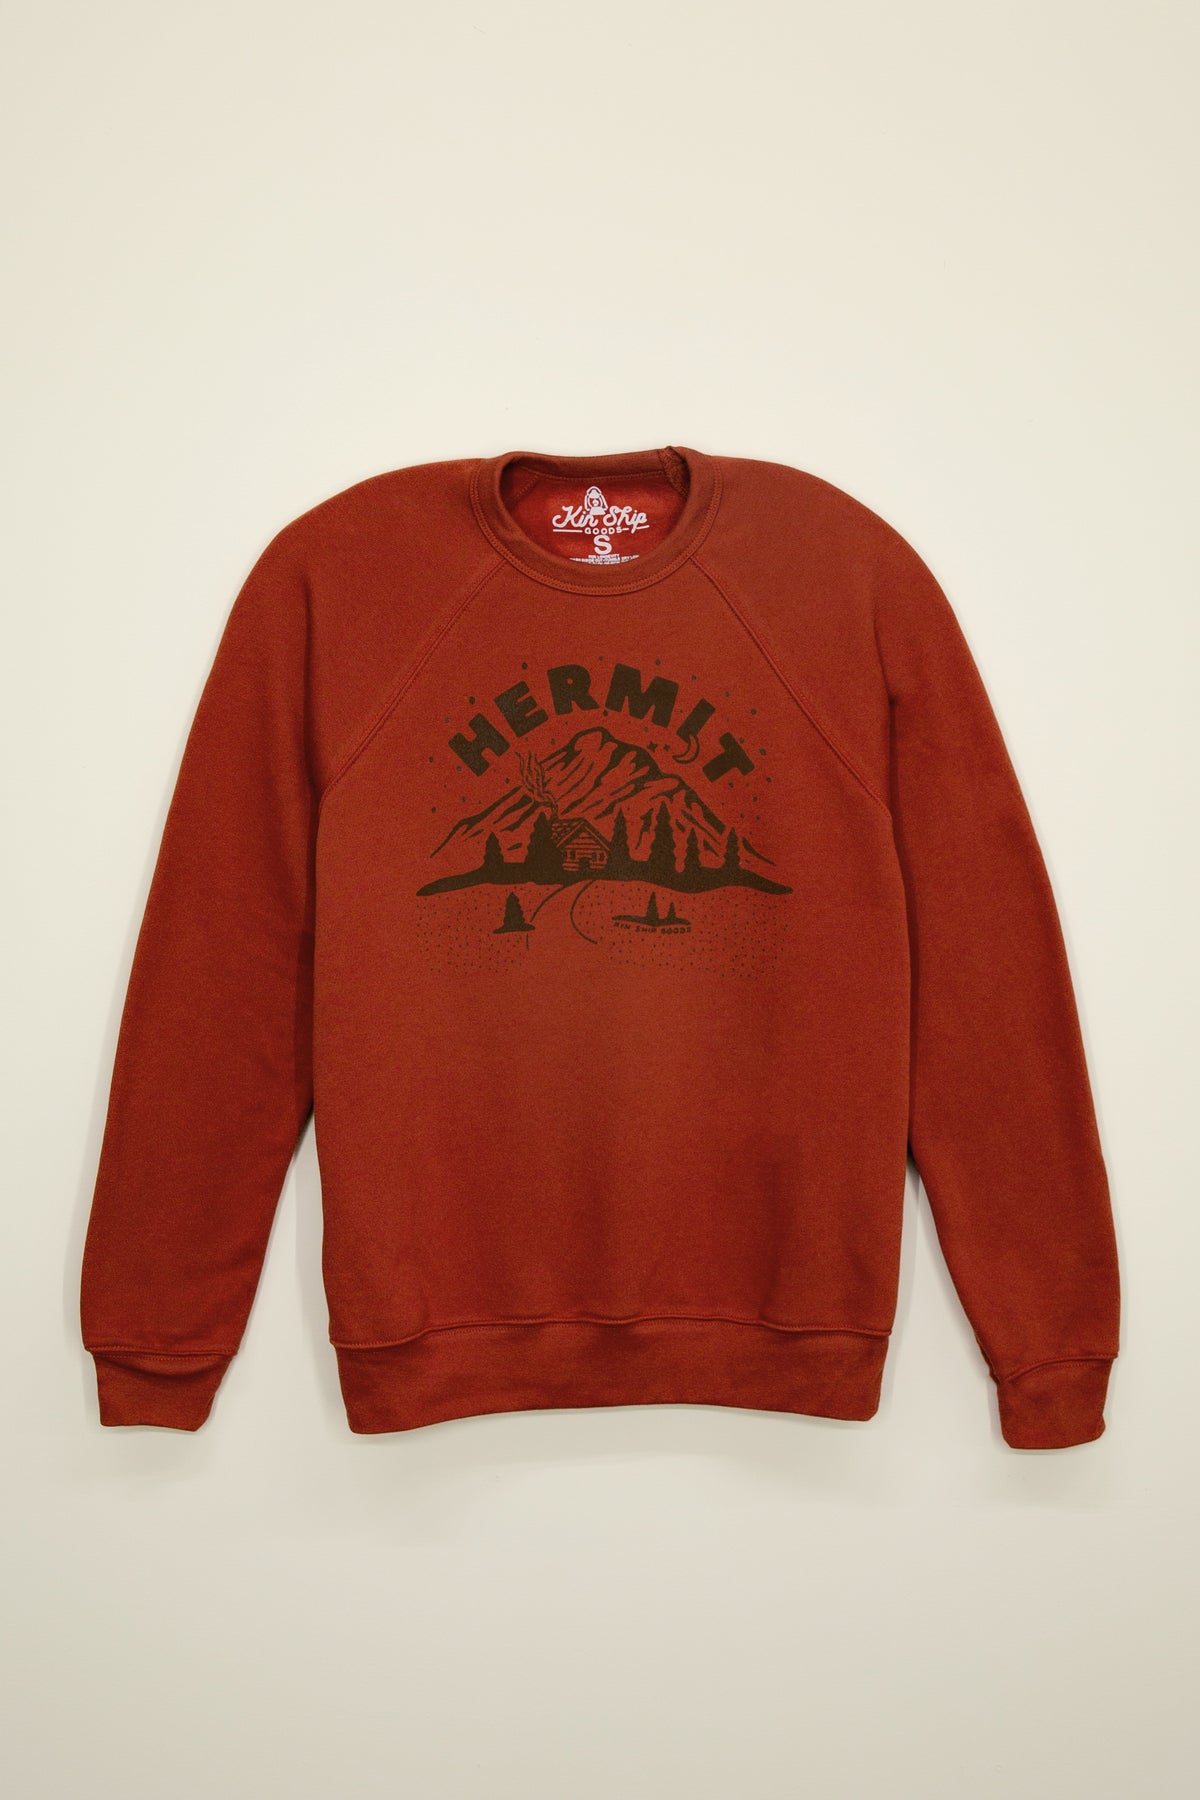 hermit sweatshirt, final sale